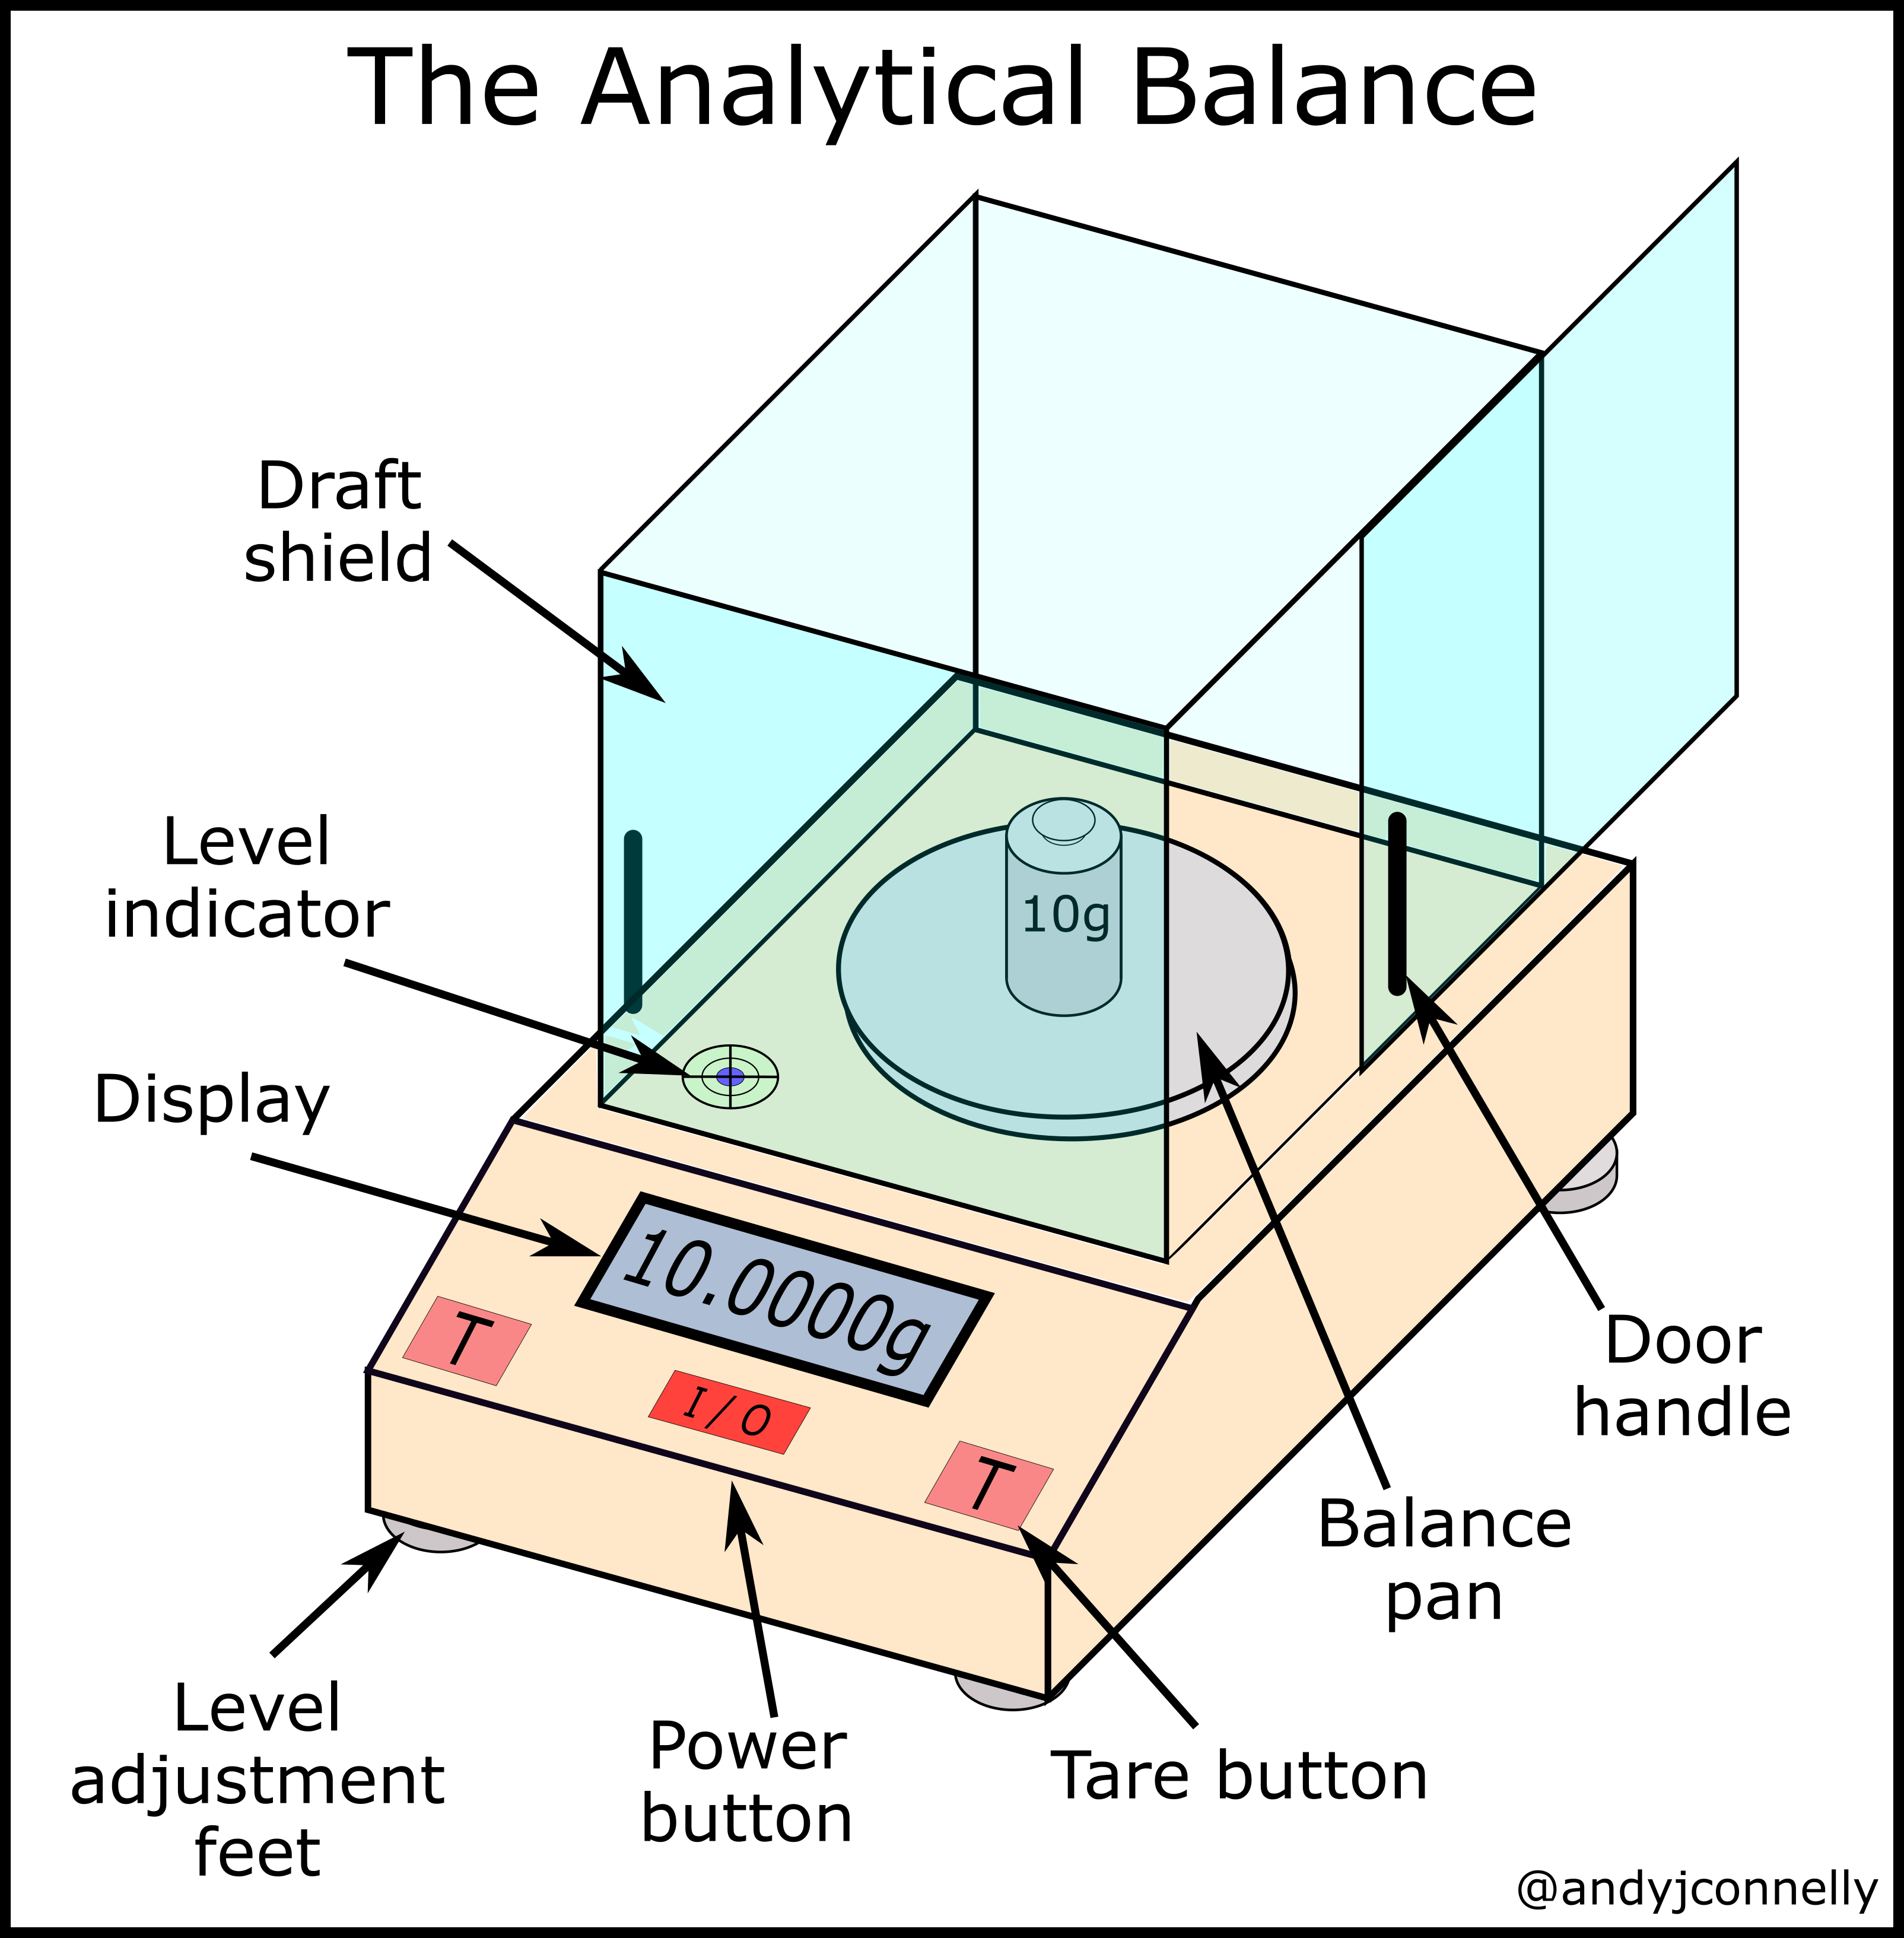 The analytical balance.